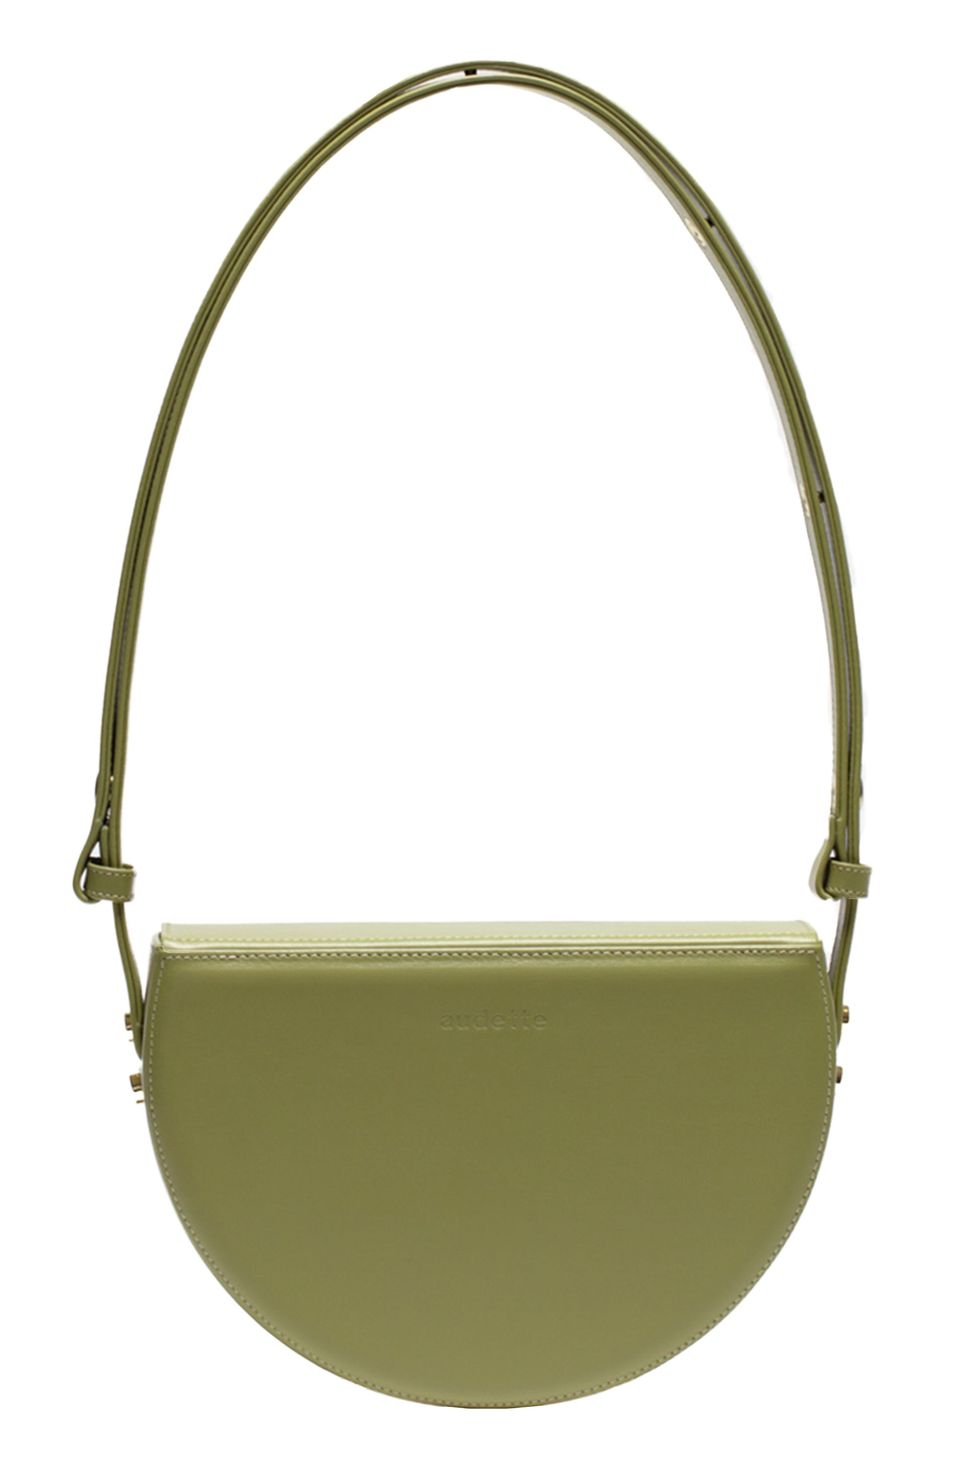 What Are the Most Popular Designer Handbag Brands? – Current Boutique